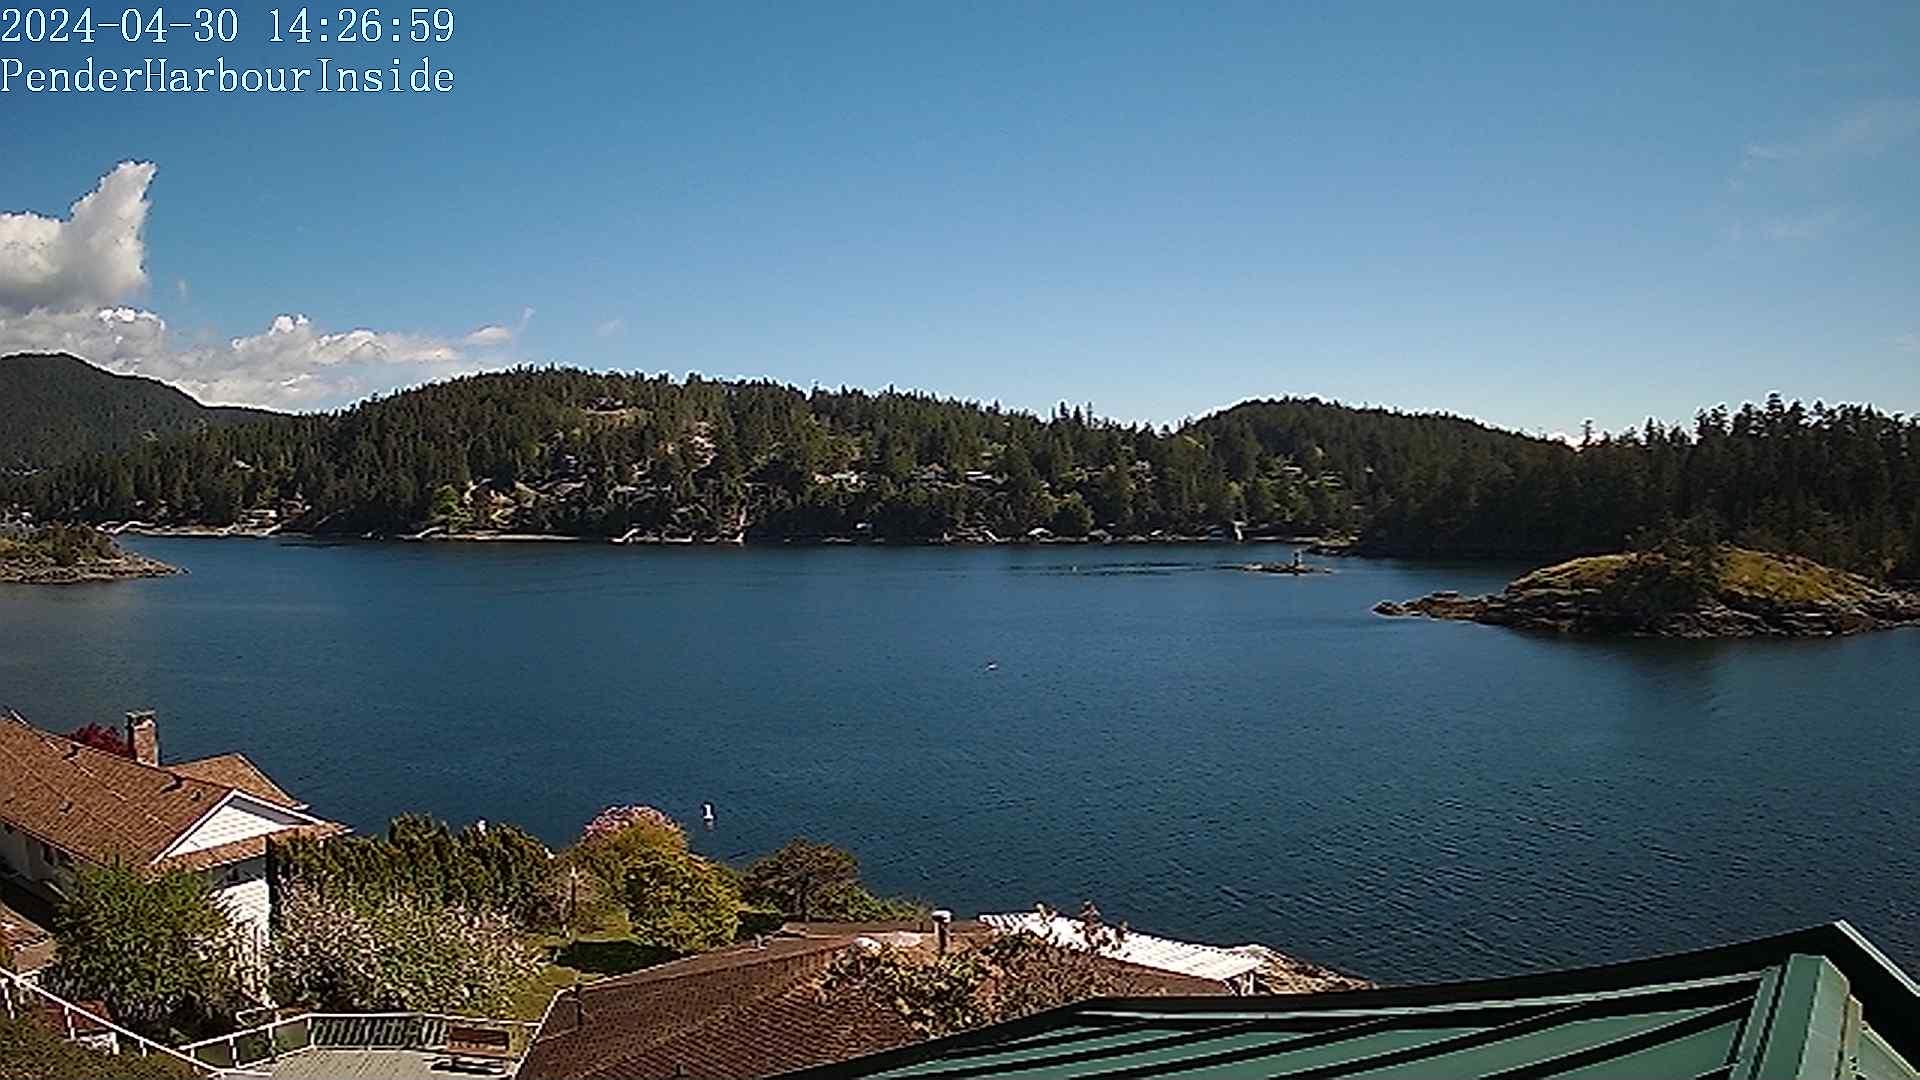 Pender Harbour webcam - Pender Harbour Inside webcam, British Columbia, Sunshine Coast